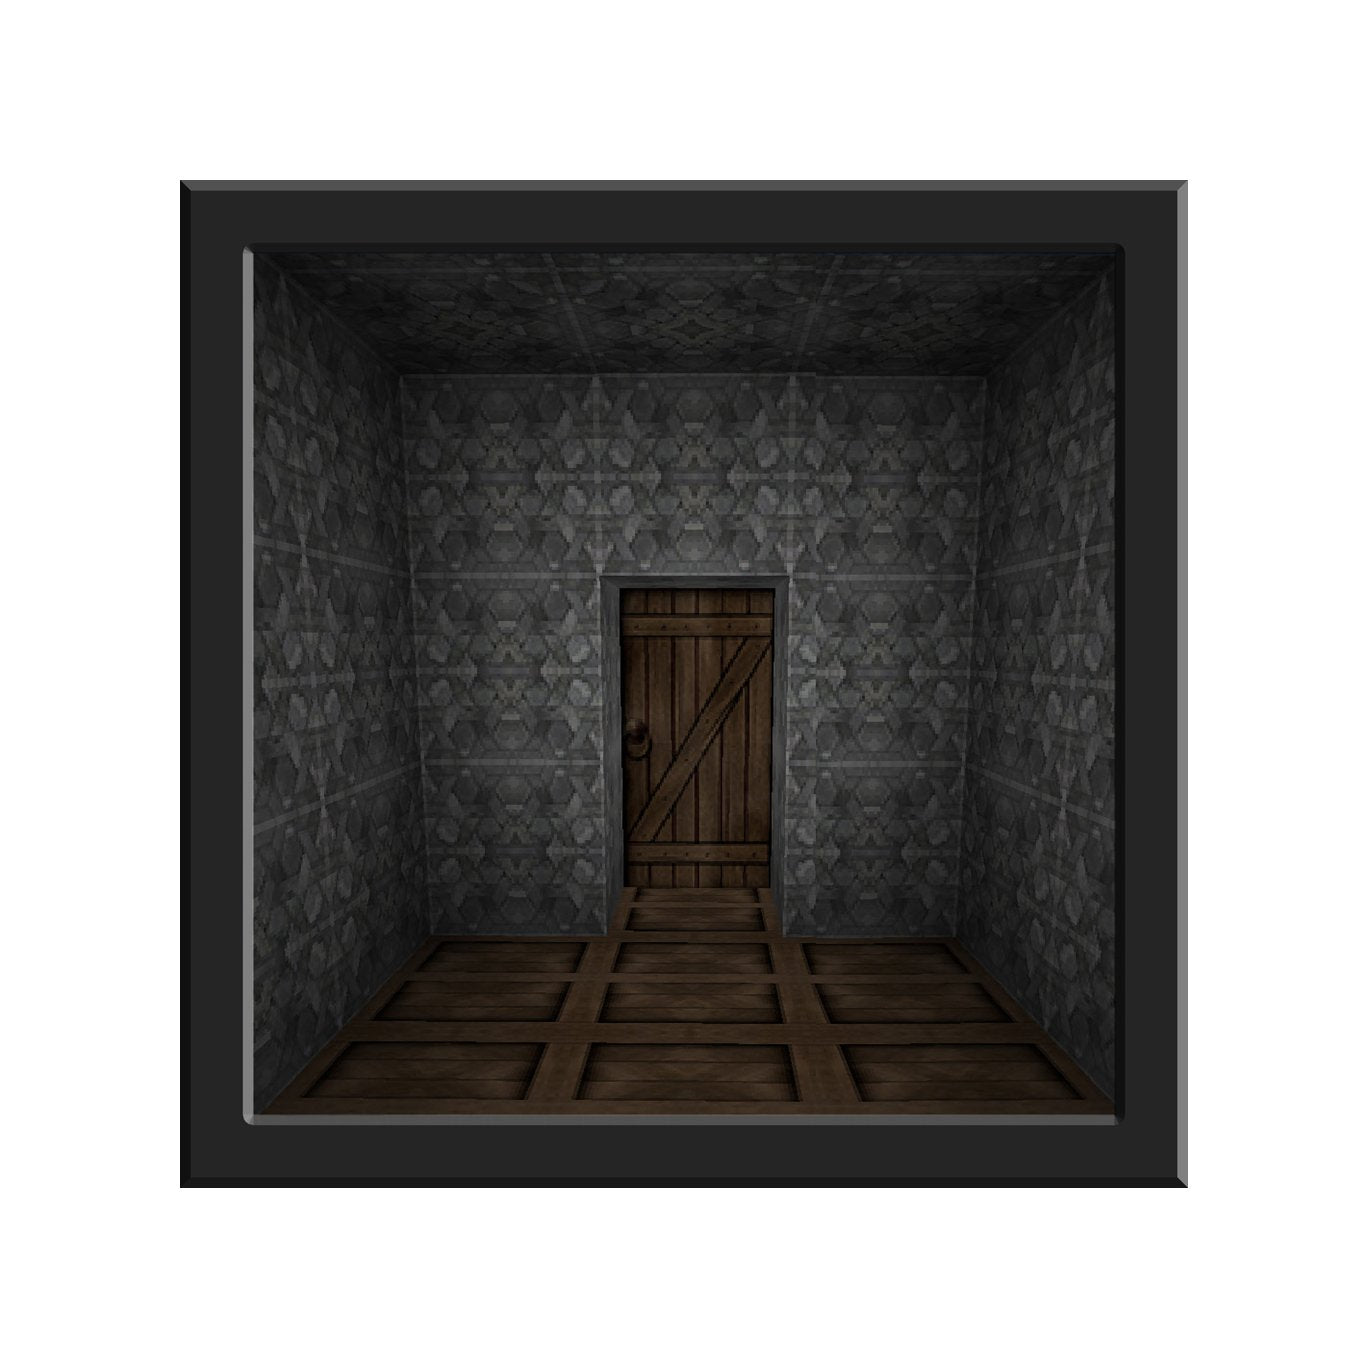 Secret Room Mine Themed Door Decal - 14" wide x 14" tall